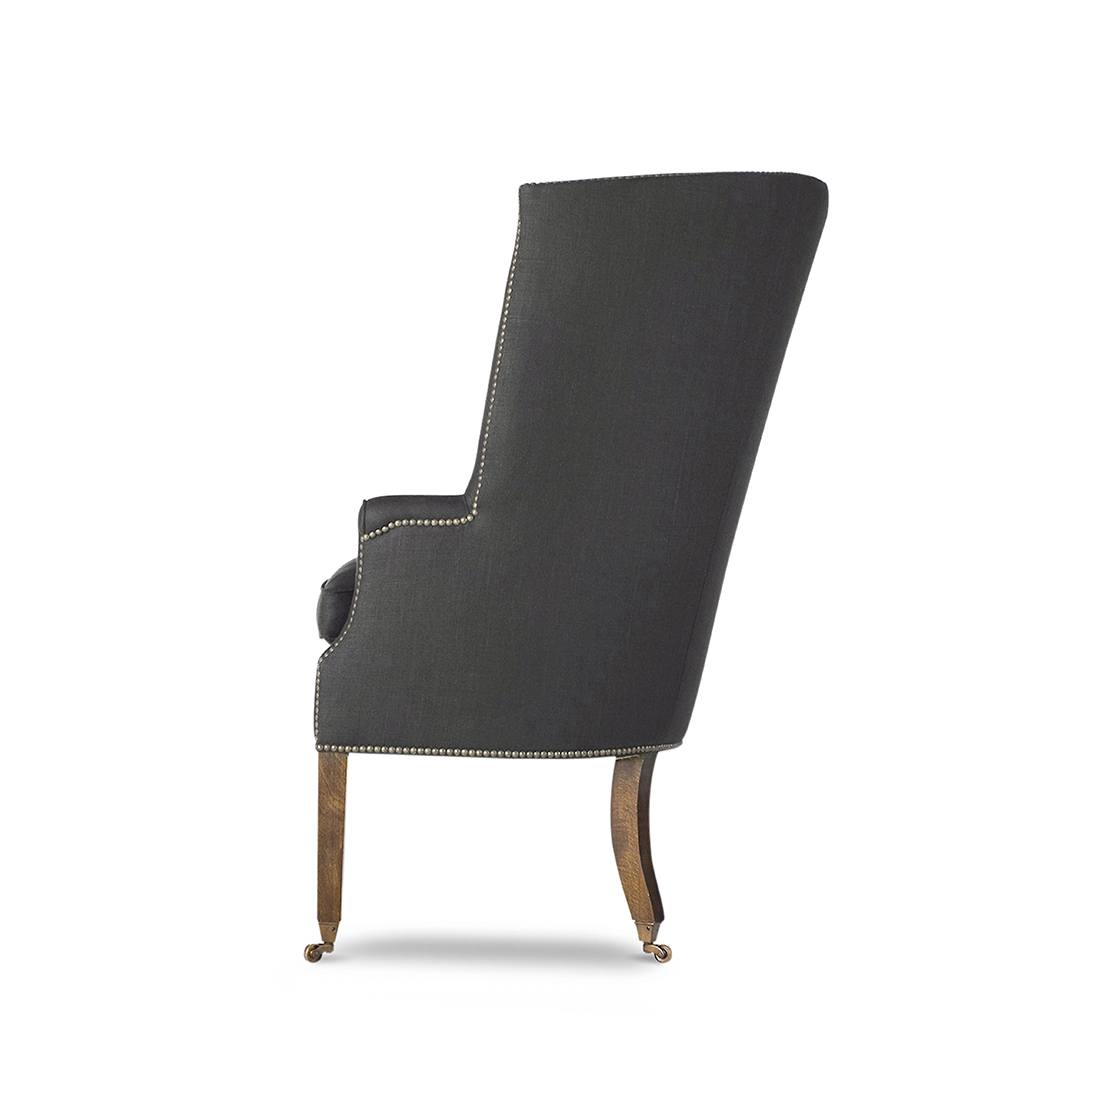 Spencer chair in Bantry linen - Espresso - Beaumont & Fletcher